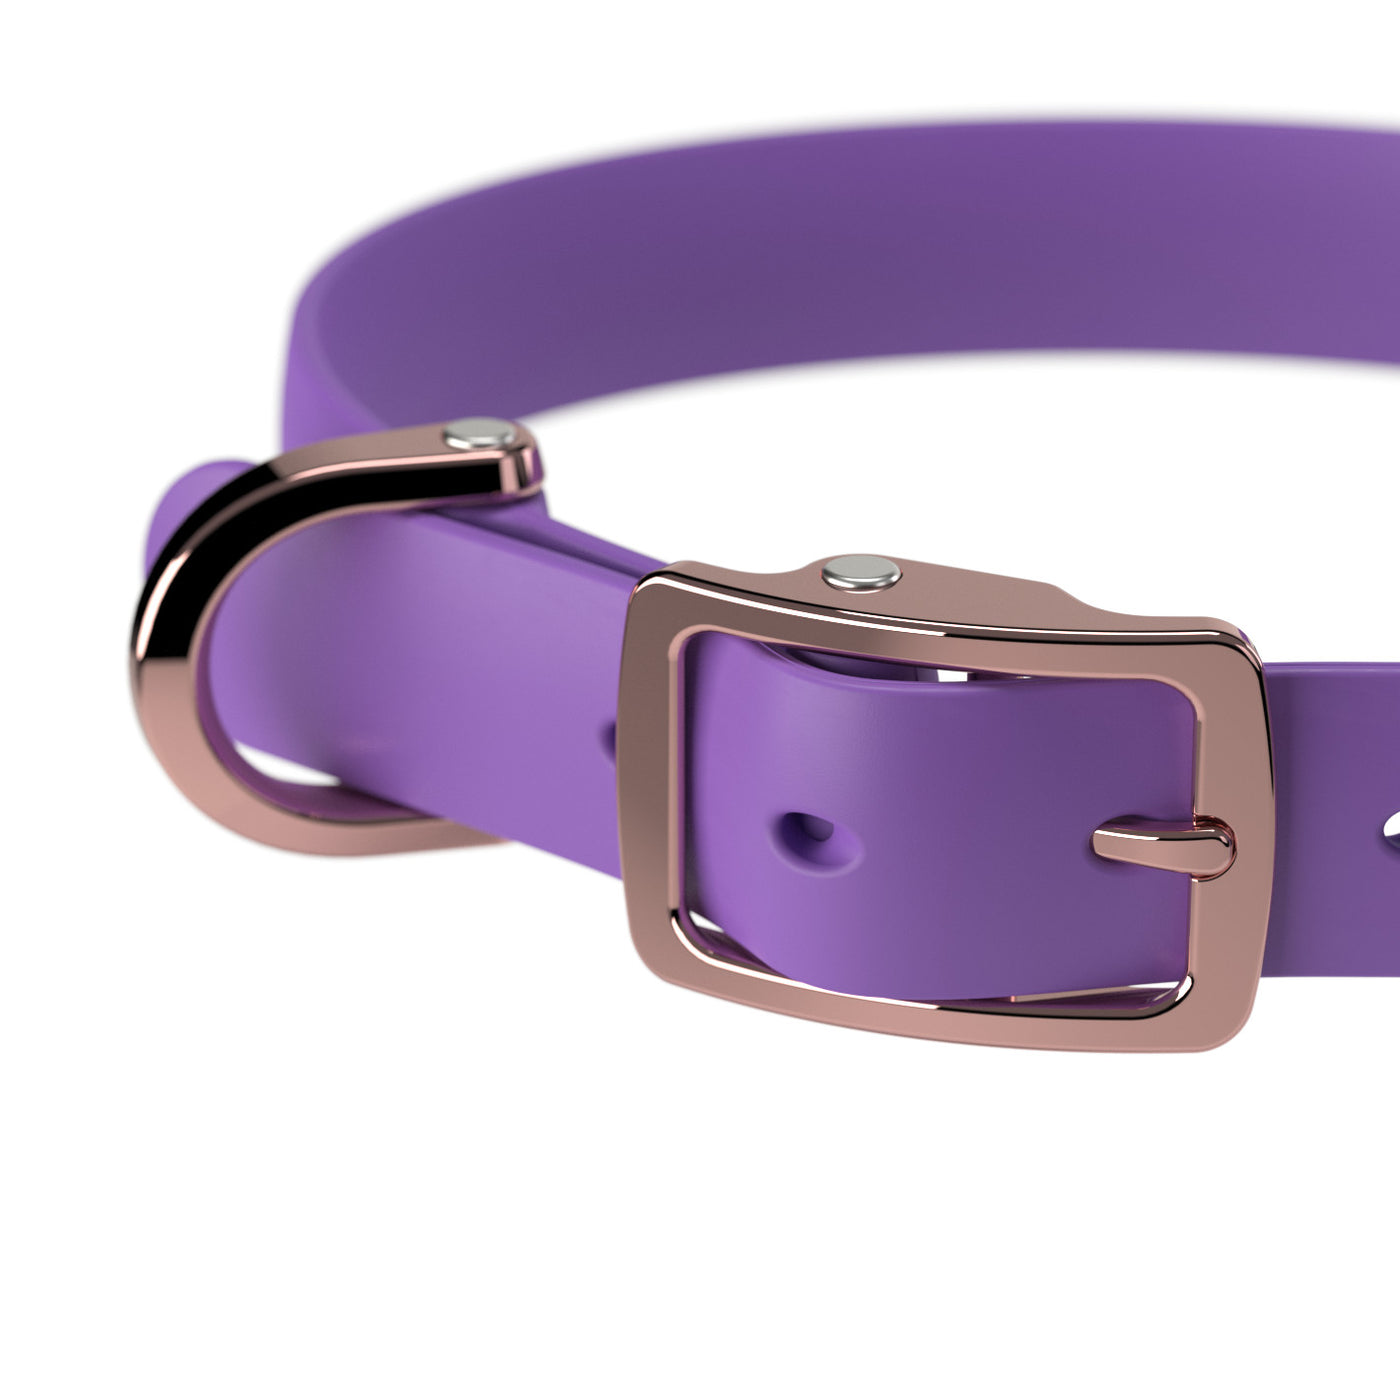 BOND - Waterproof Dog Collar - Grape Purple / Rose Gold Edition